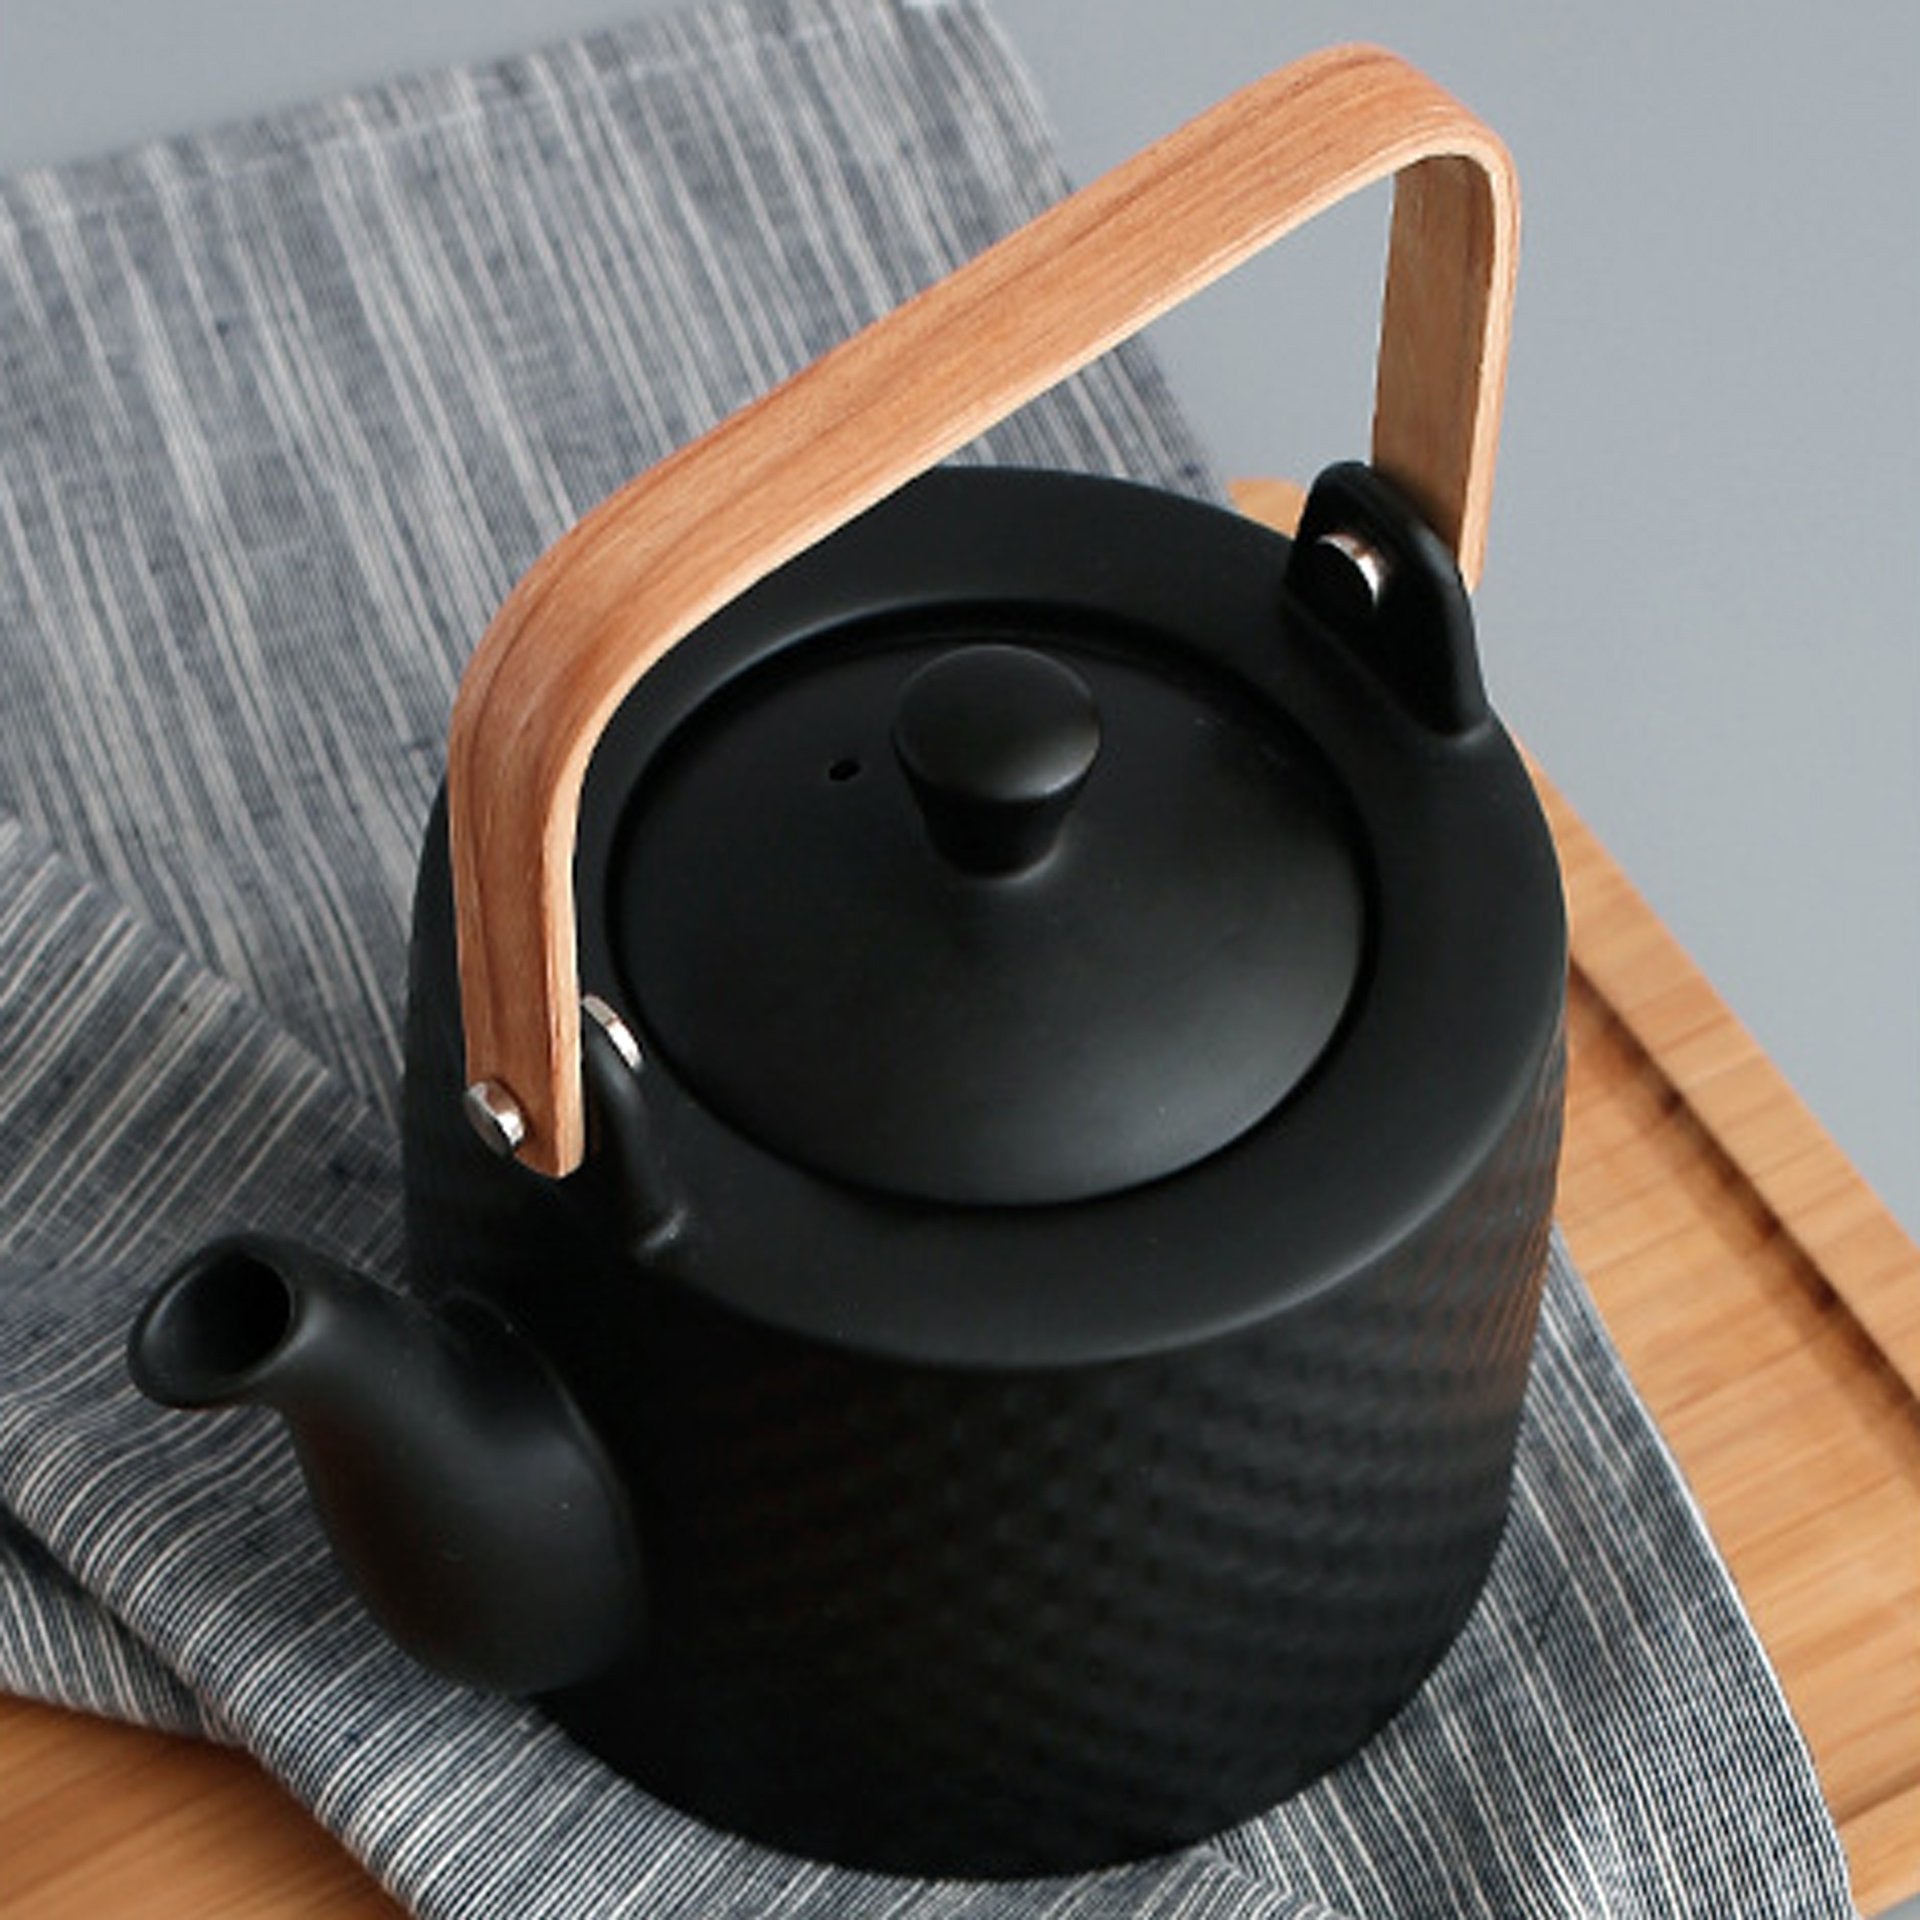 Simple Modern Japanese Ceramic Tea Set - 1 Teapot + 2 Cups